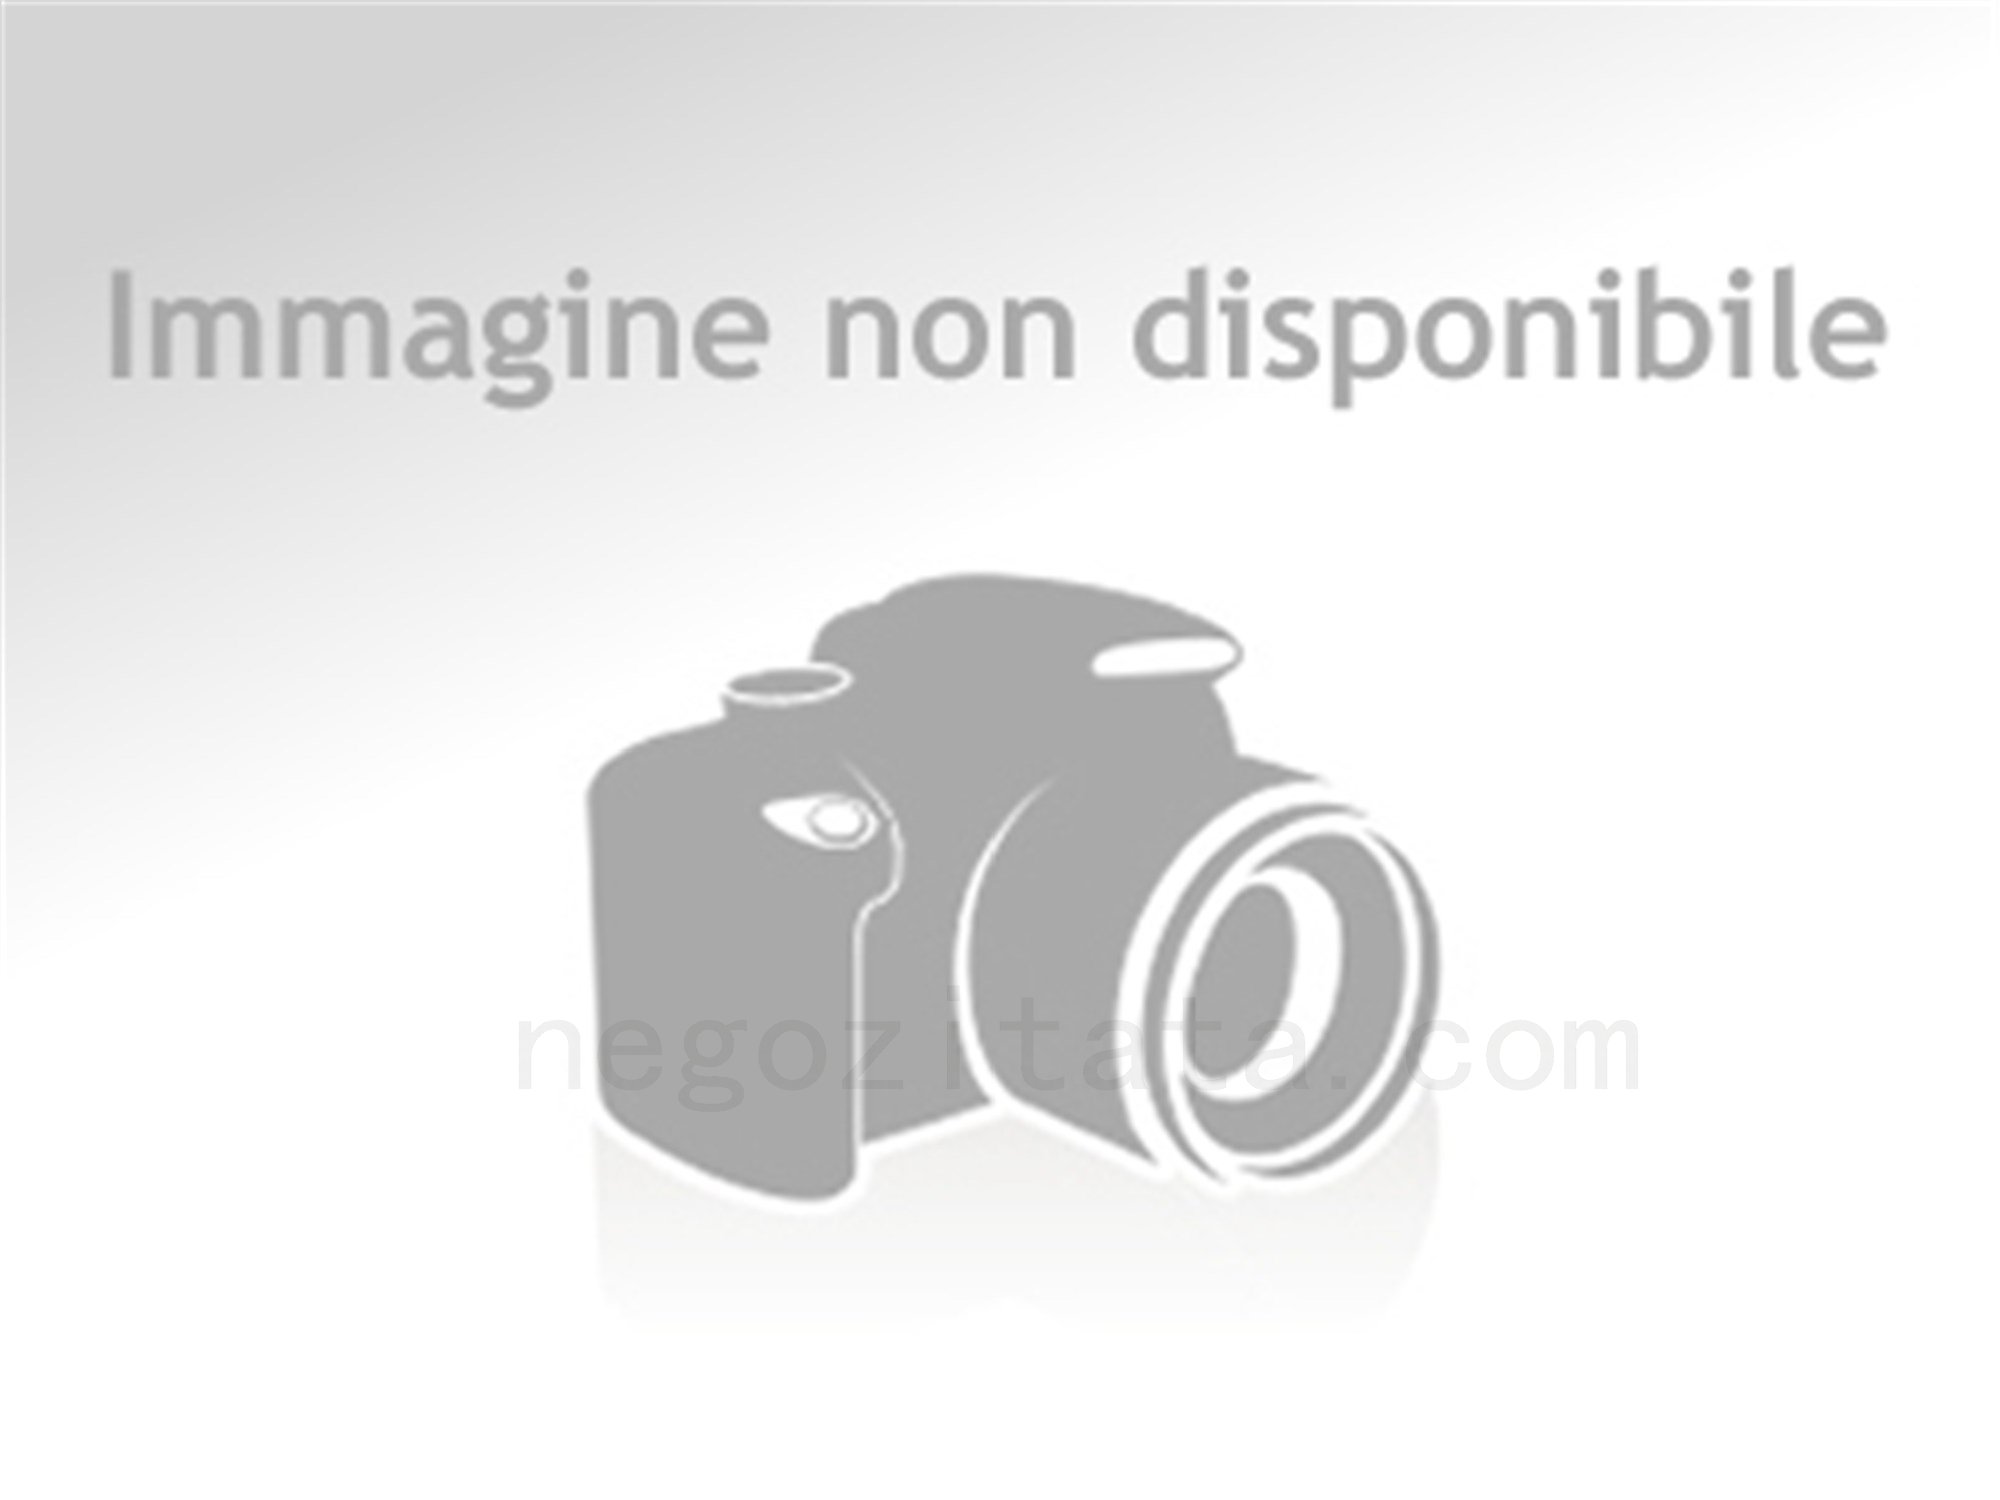 Anfibi platform neri, Tacco alto 4cm Vendita Online